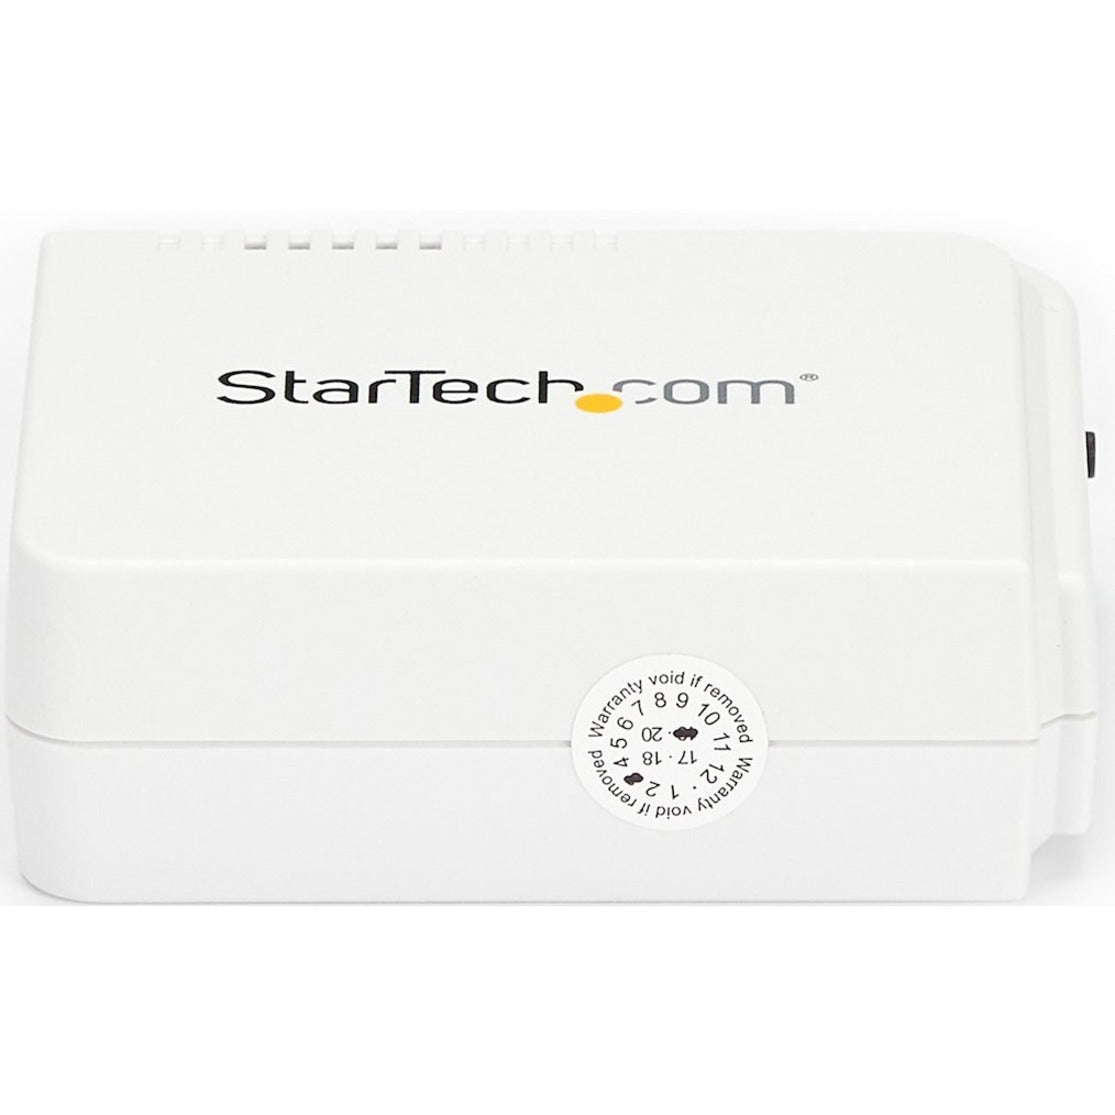 StarTech.com PM1115UW Wireless Print Server, USB Wireless N Network with 10/100 Mbps Ethernet Port